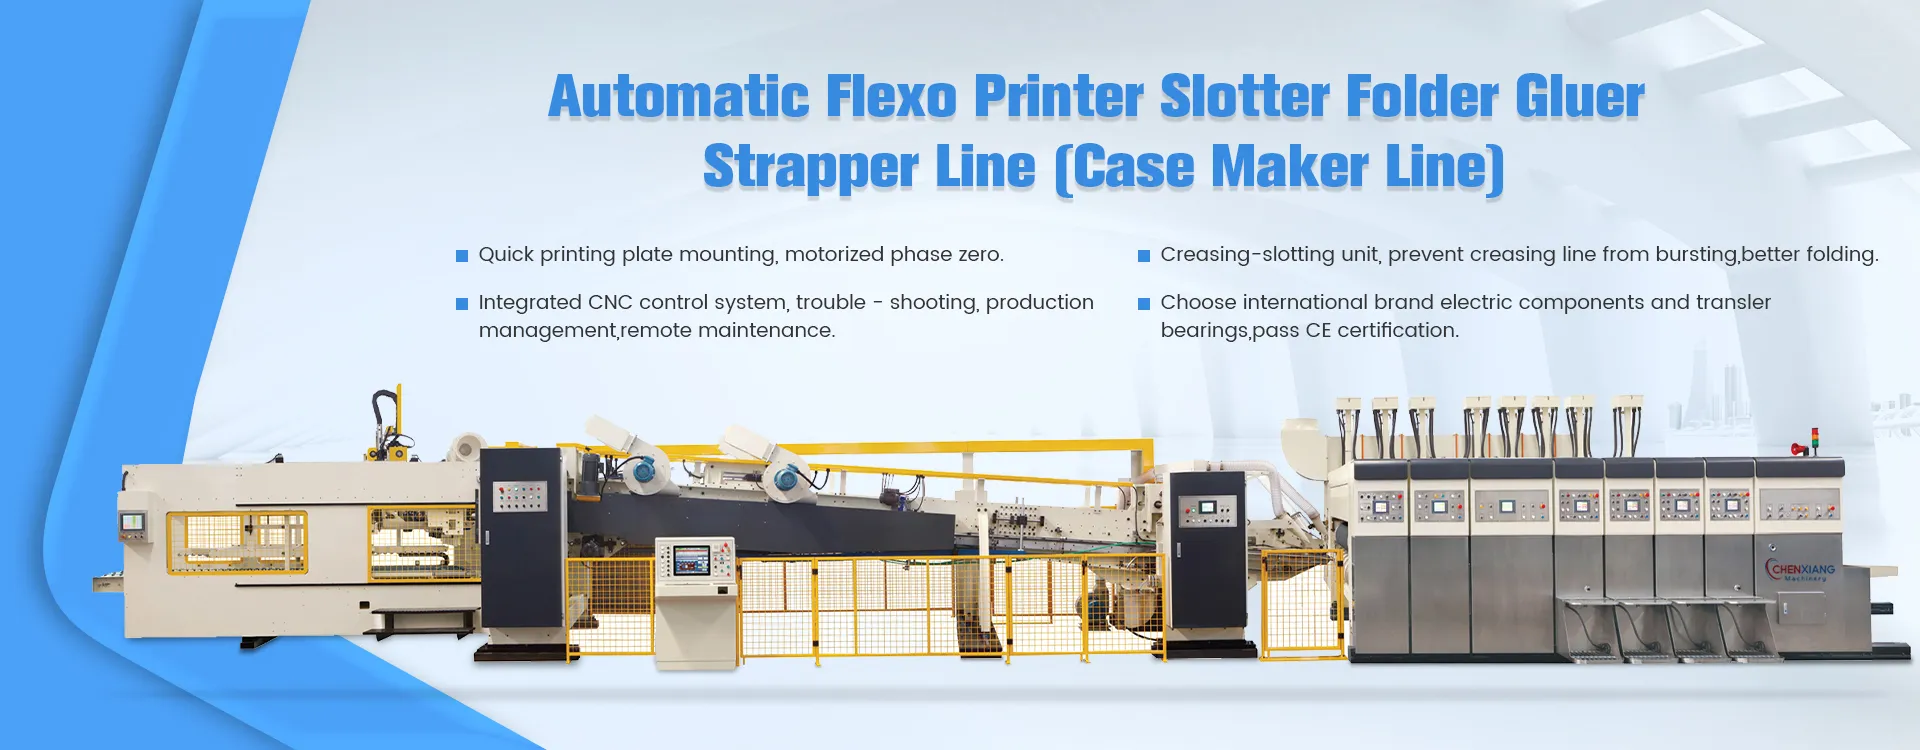 Automatic Flexo Printer Slotter Folder Gluer Strapper Line [Linea Case Maker]